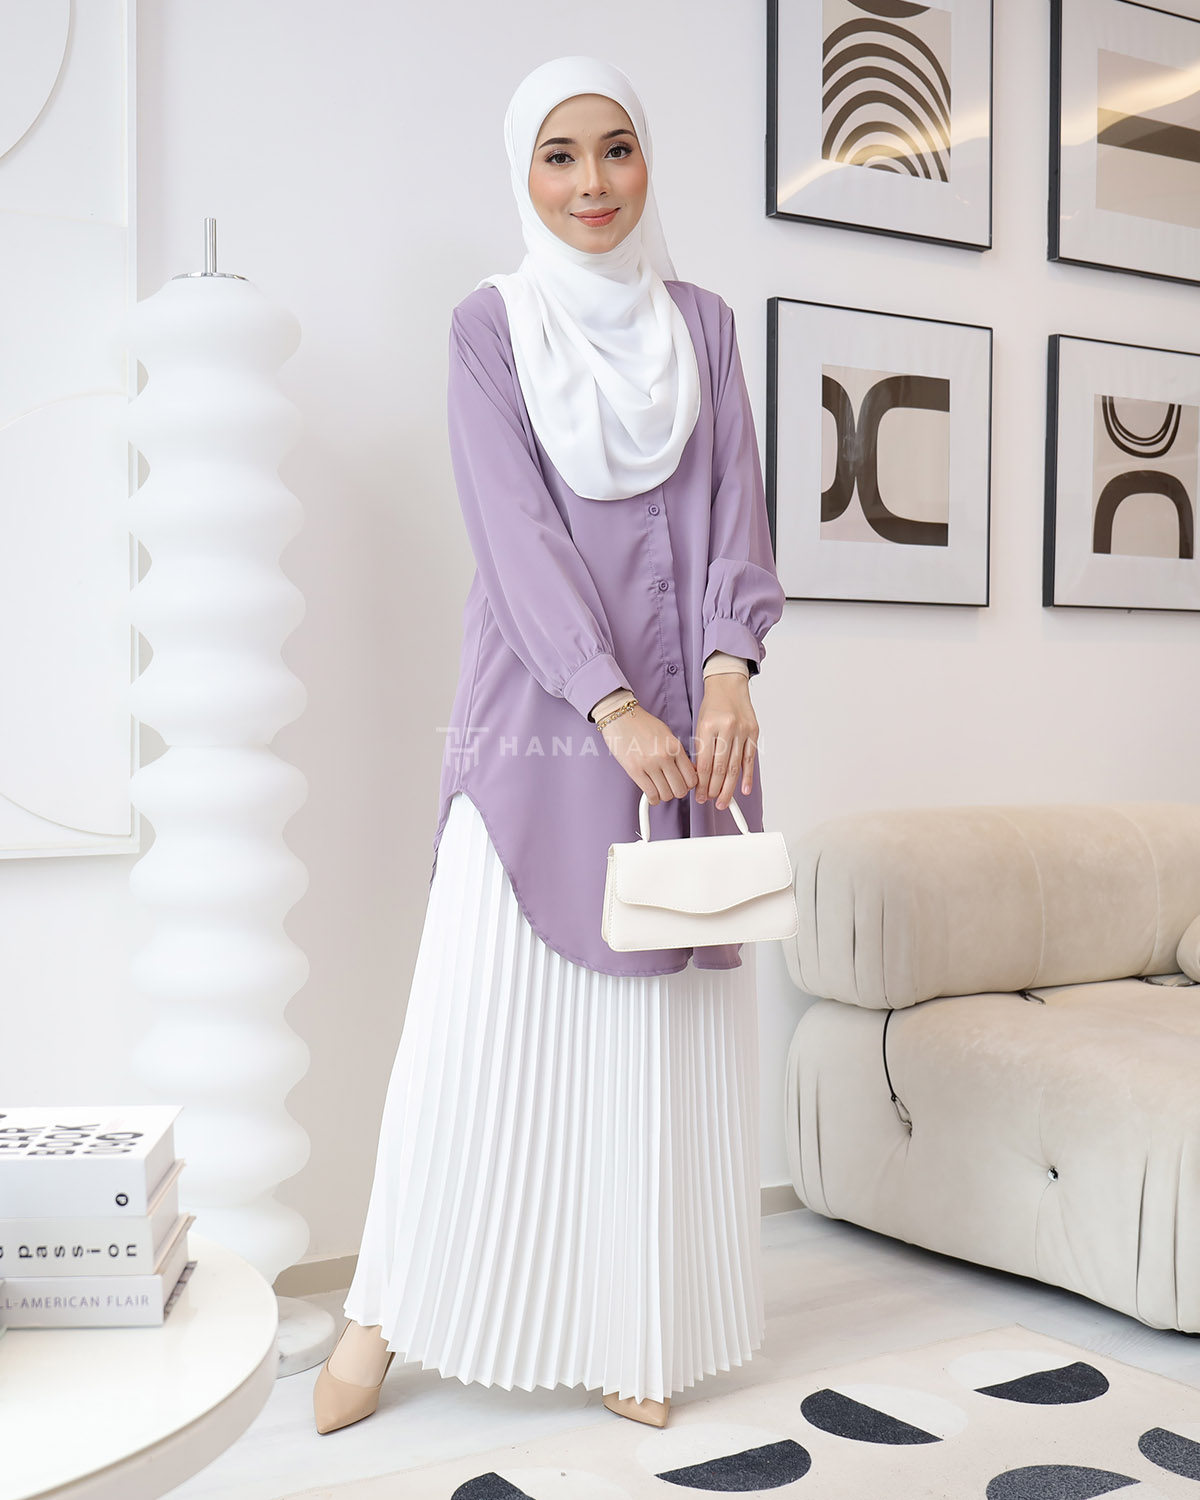 Adena Top in Purple Rose – Hana Tajuddin